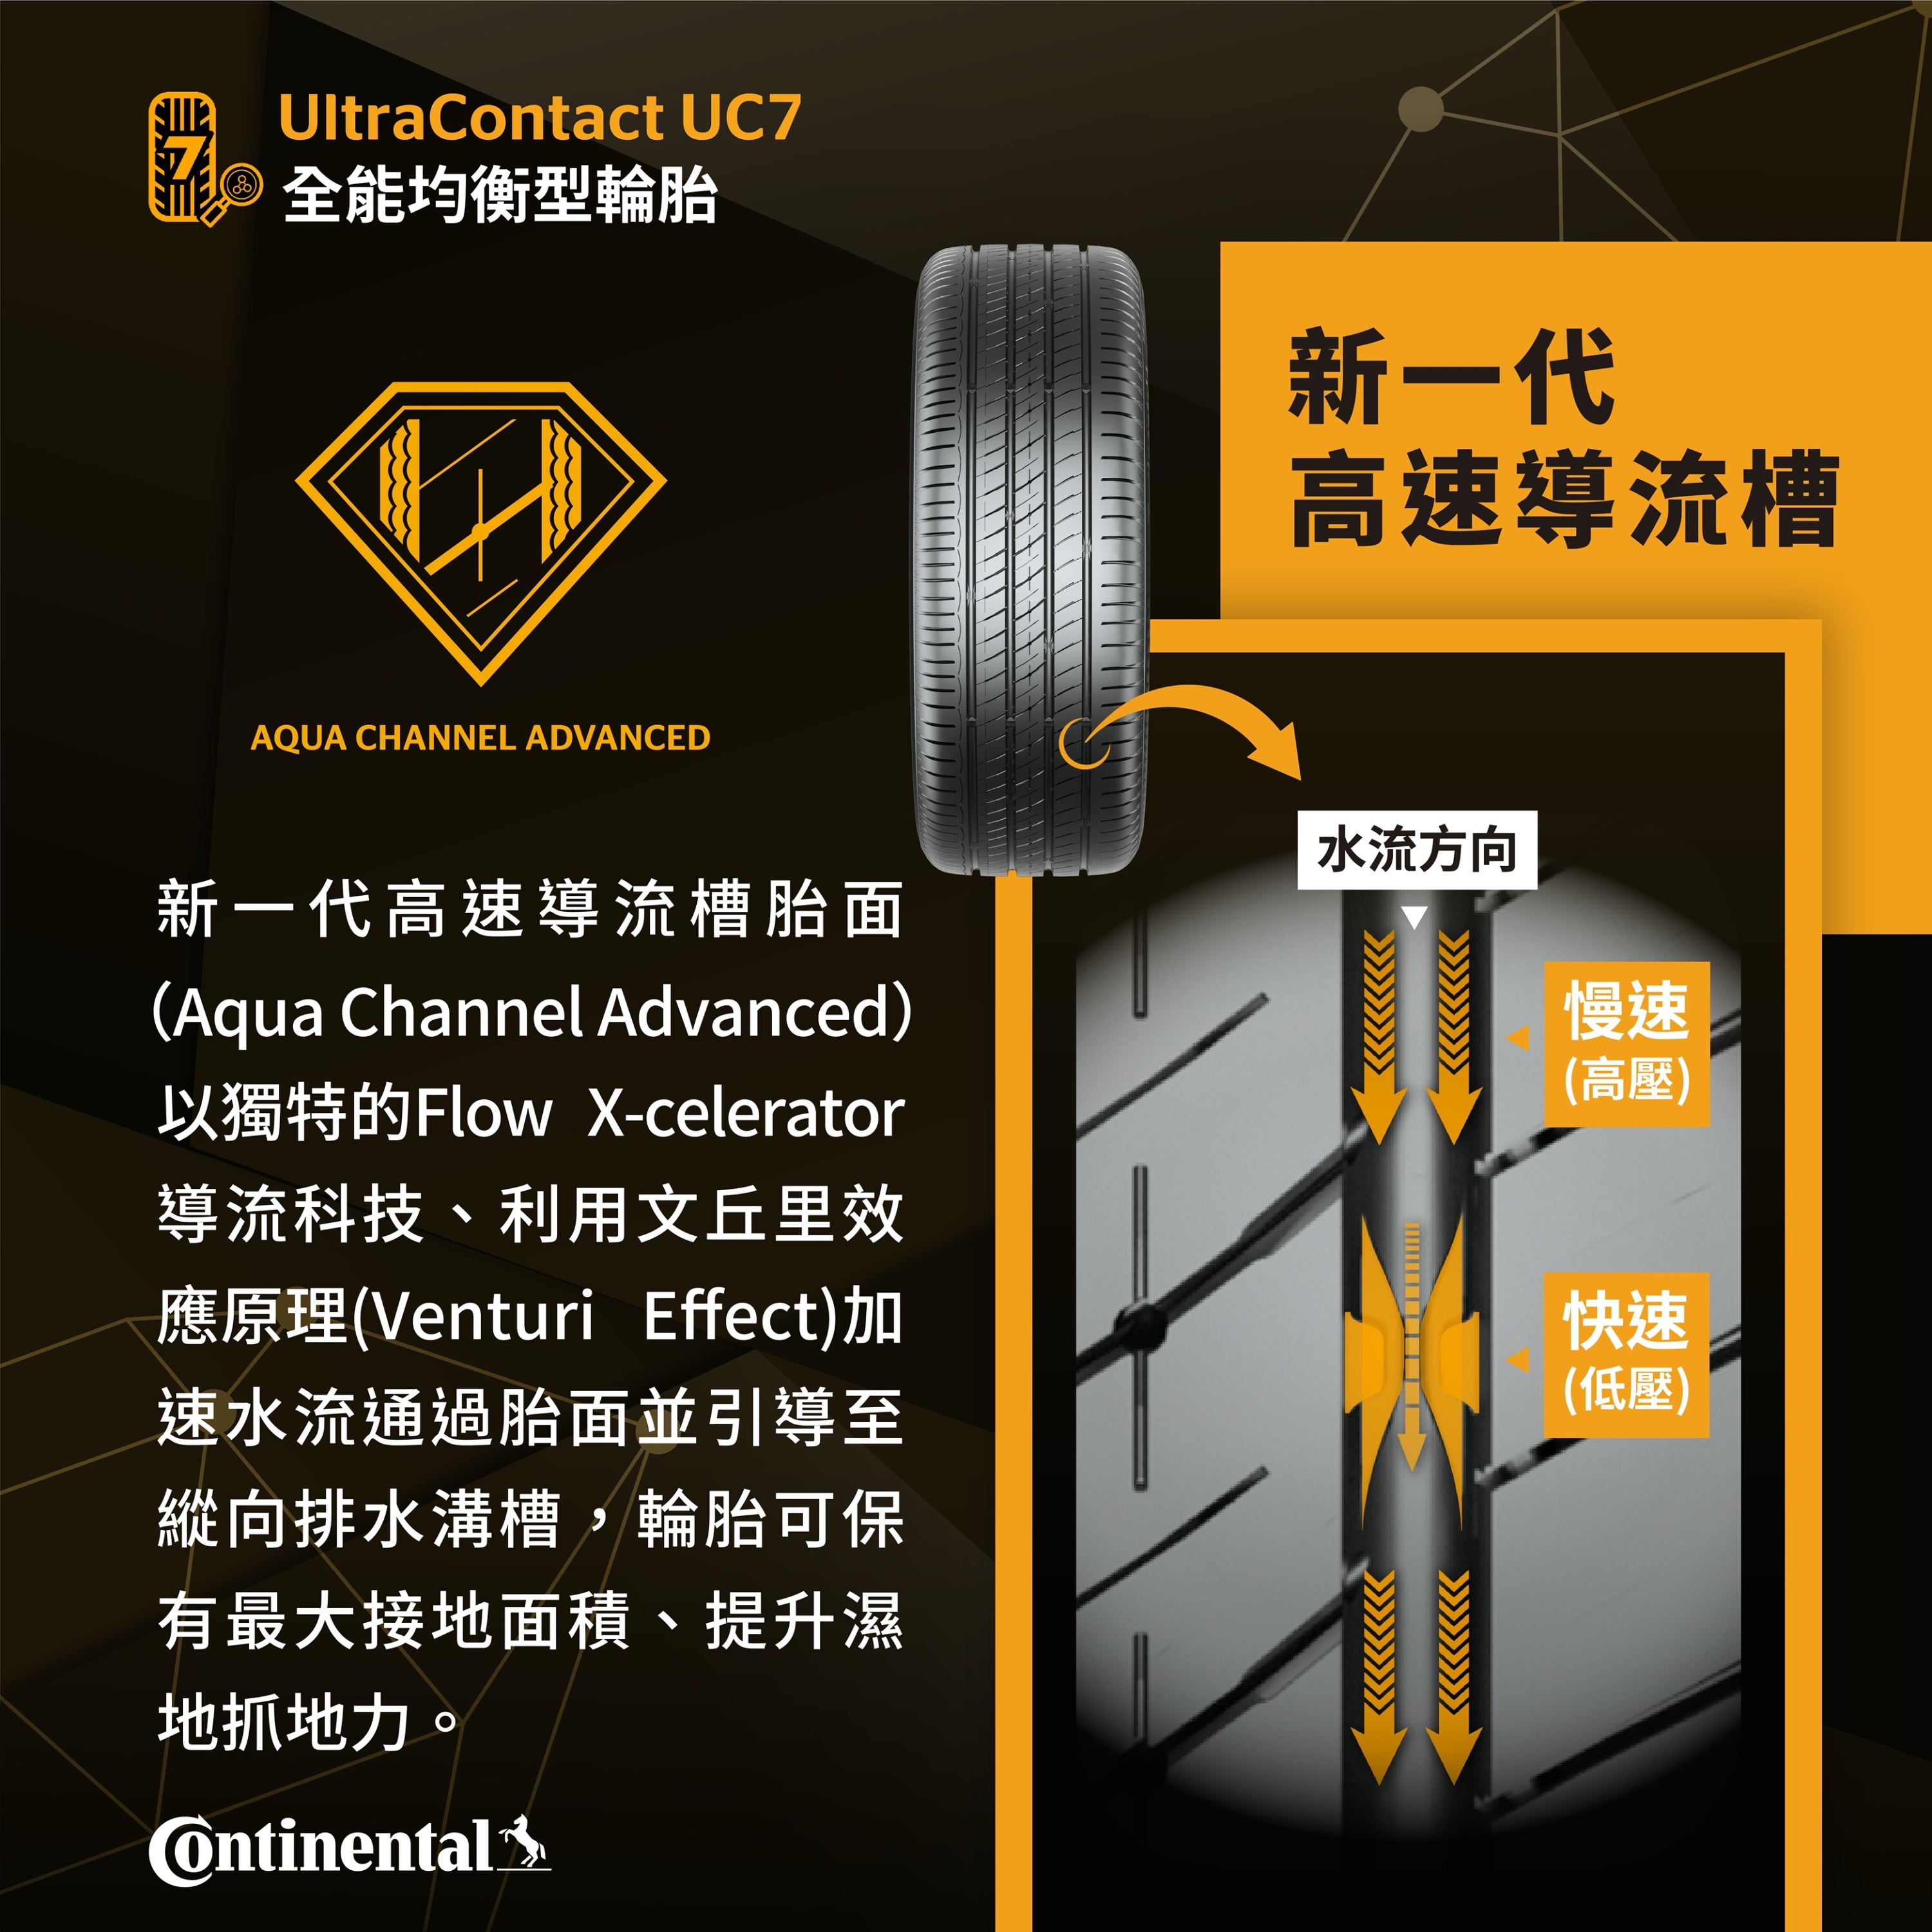 新聞圖五_ UltraContact UC7 新一代高速導流槽 高速排水技術 (Aqua Channel Advanced).jpg